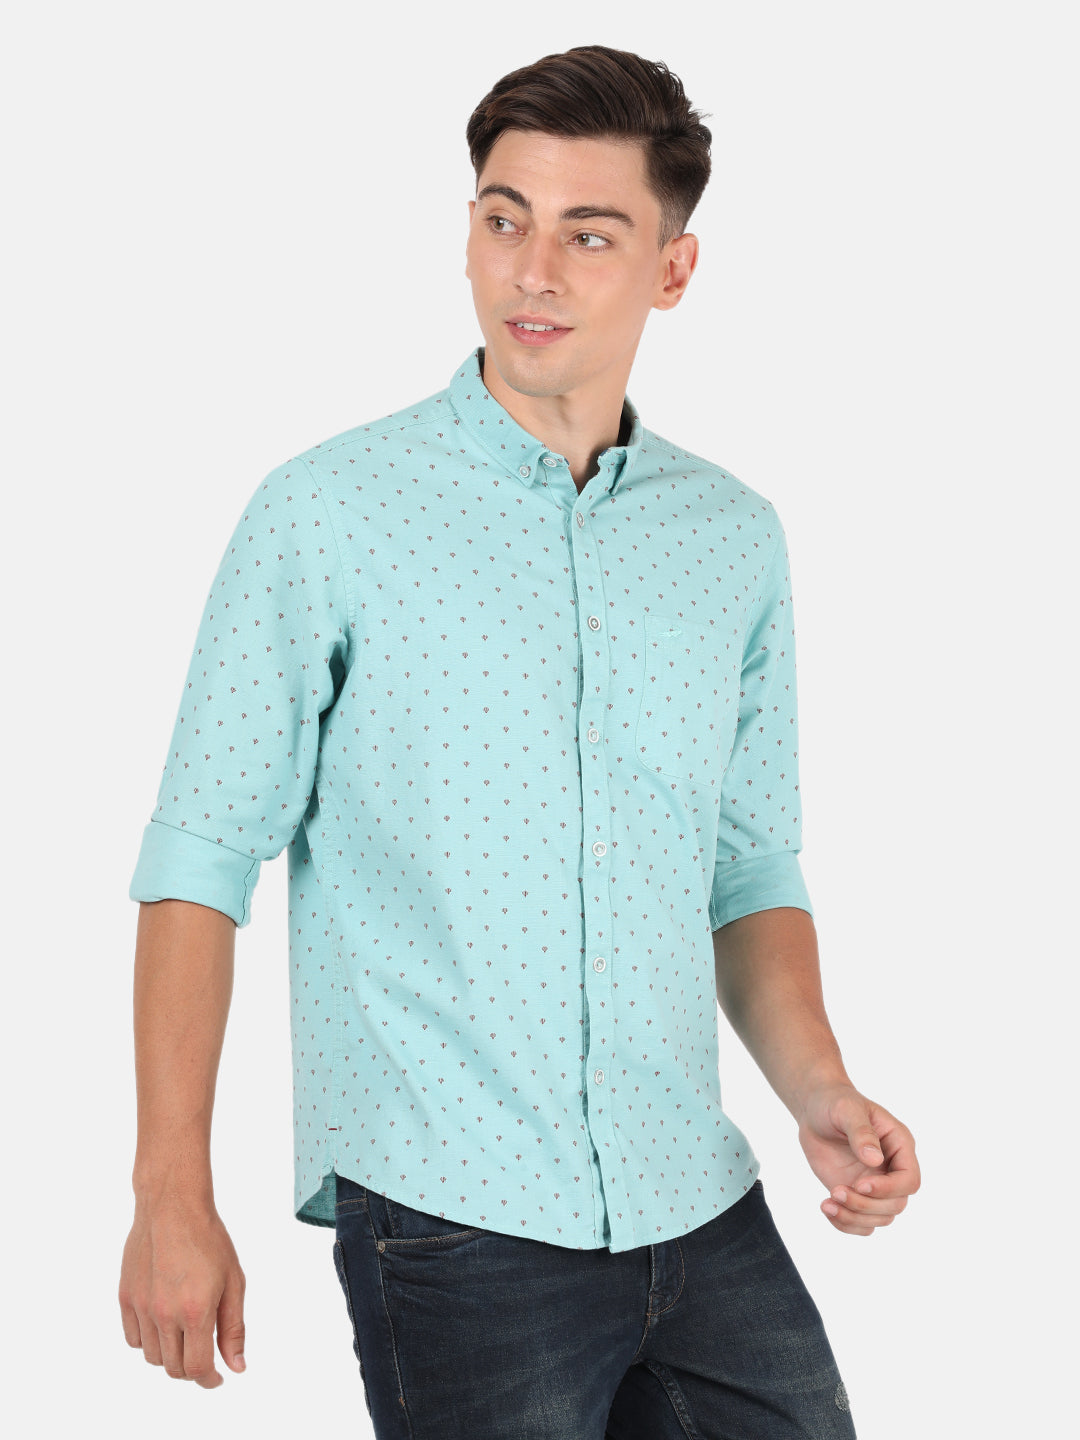 Crocodile Casual Full Sleeve Comfort Fit Printed Aqua with Collar Shirt for Men